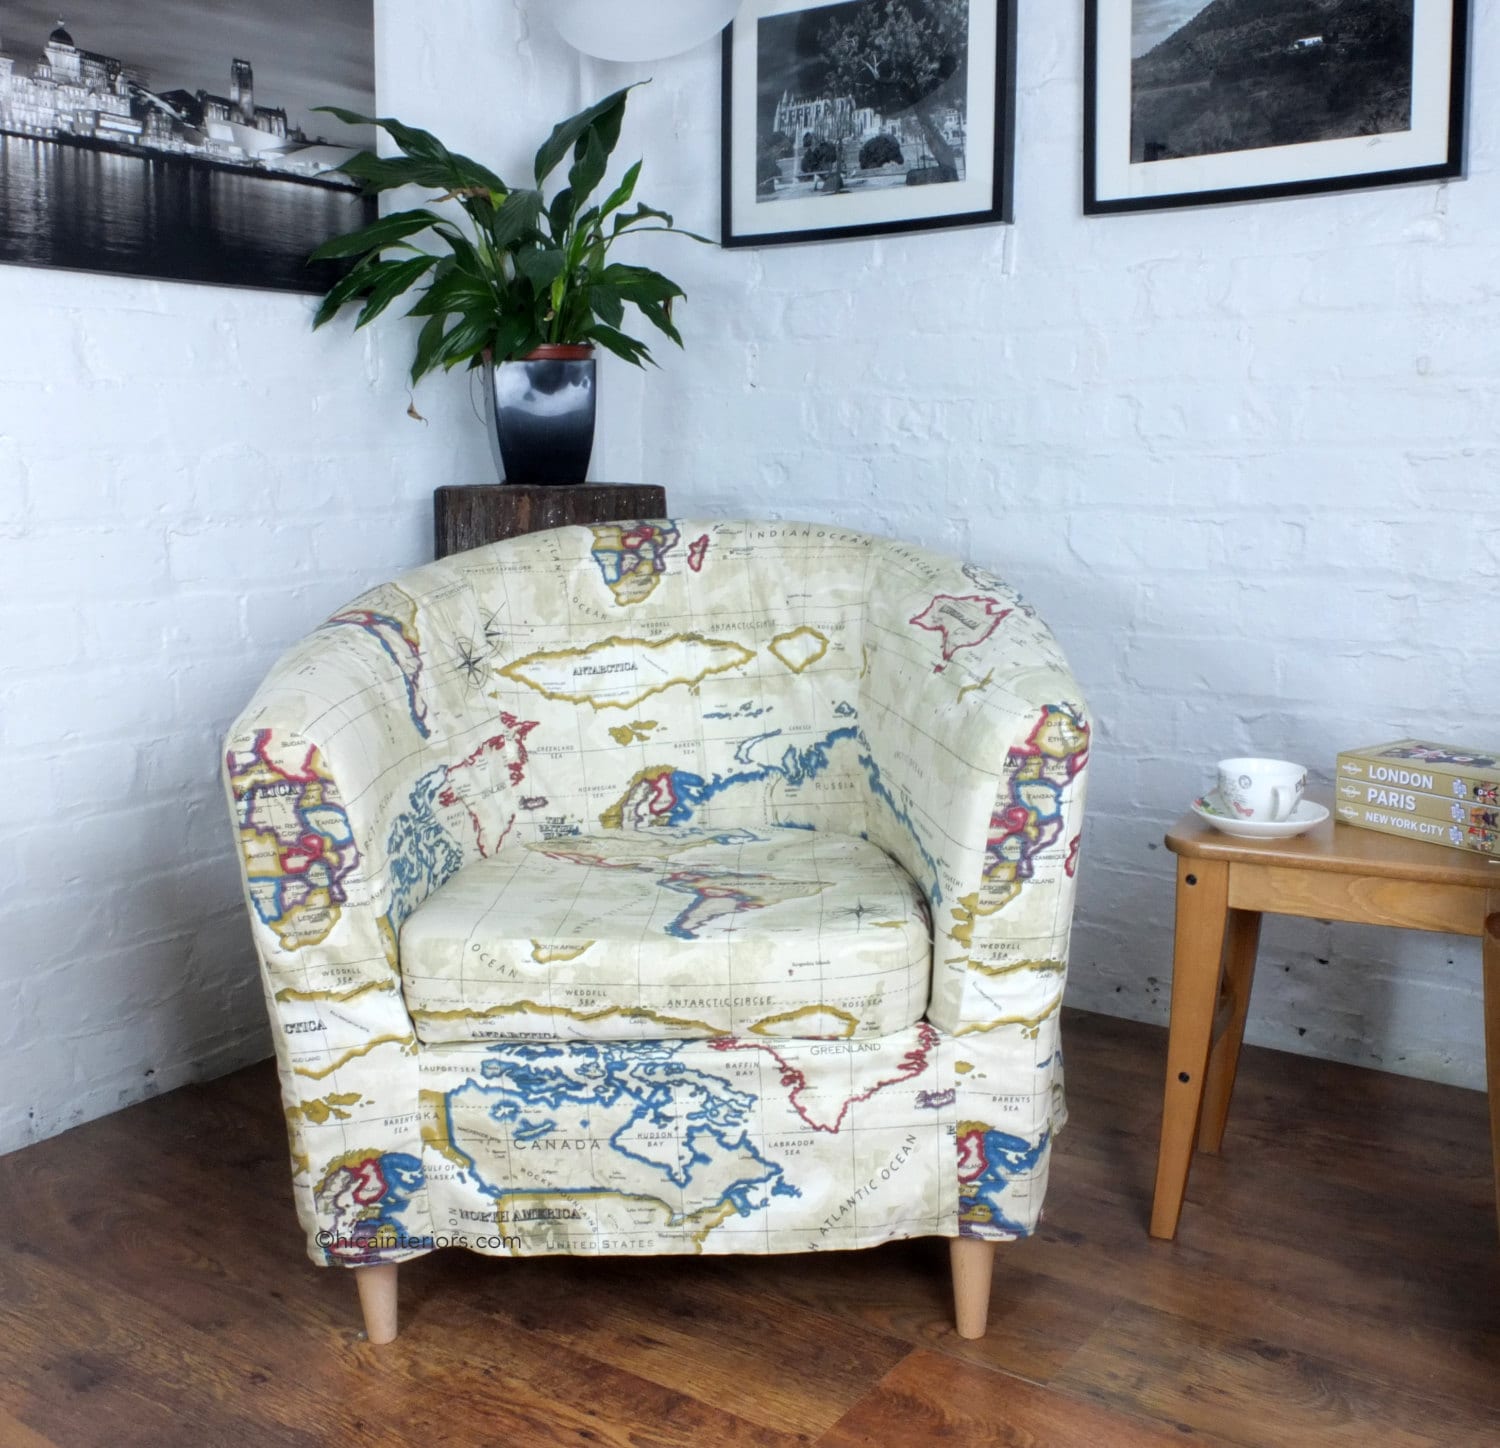 Adelaide Eerlijkheid Jachtluipaard Ikea Tullsta Tub Chair Cover in Antique Atlas Cotton Fabric - Etsy